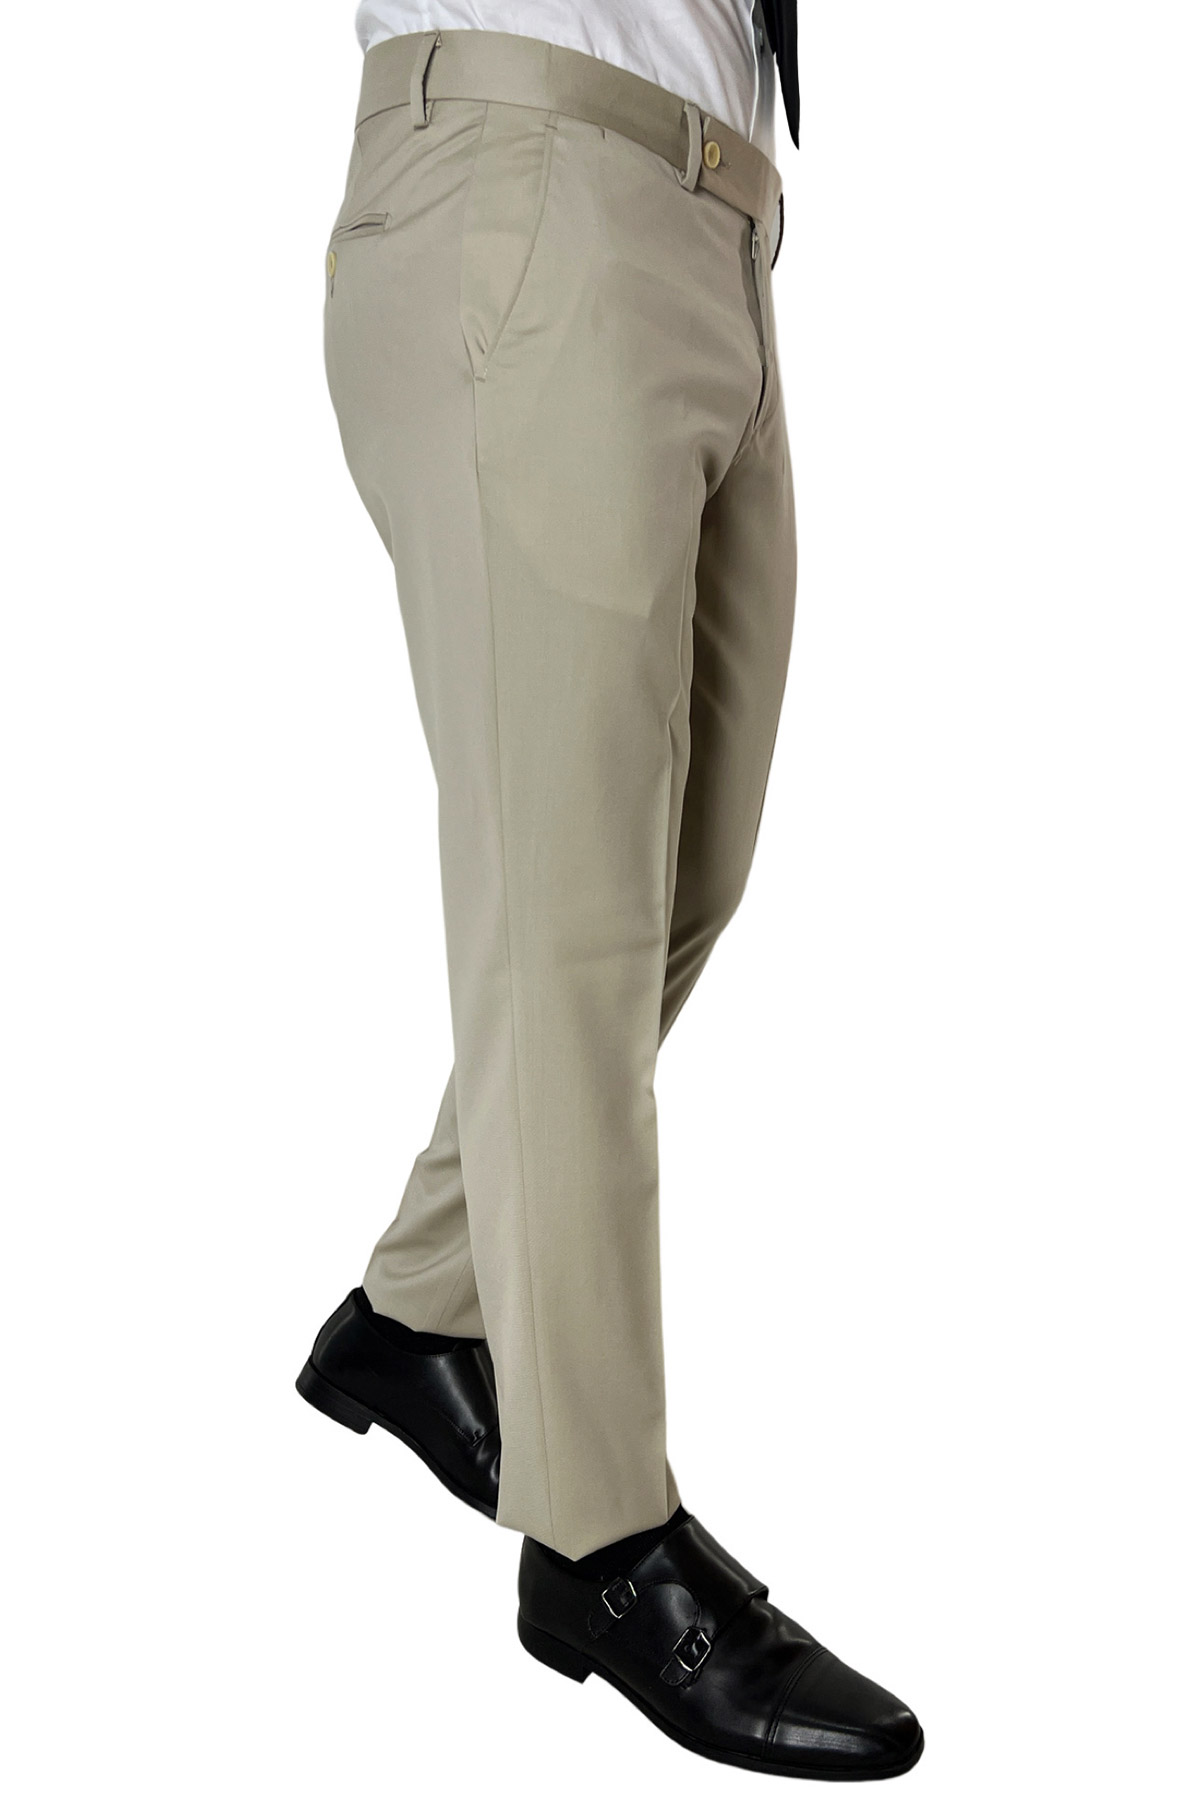 Pantalone uomo beige tasca america in fresco lana super 130's Vitale Barberis Canonico